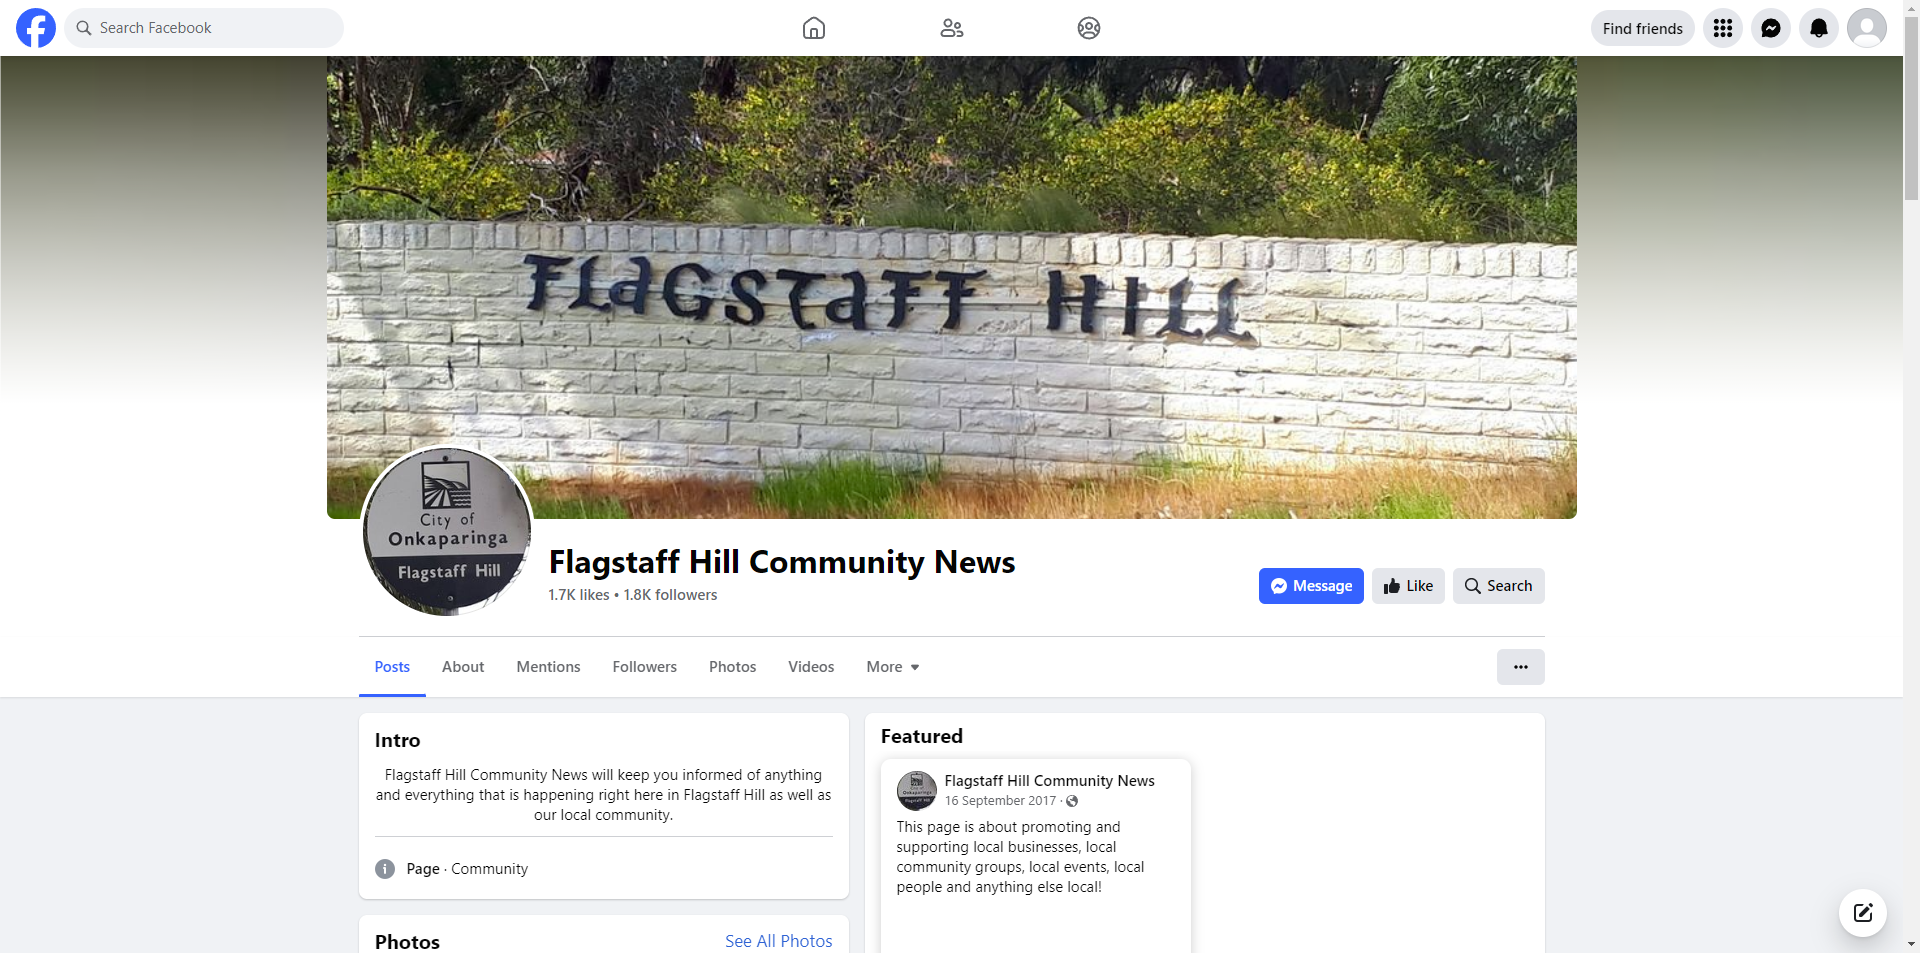 Flagstaff Hill Community News